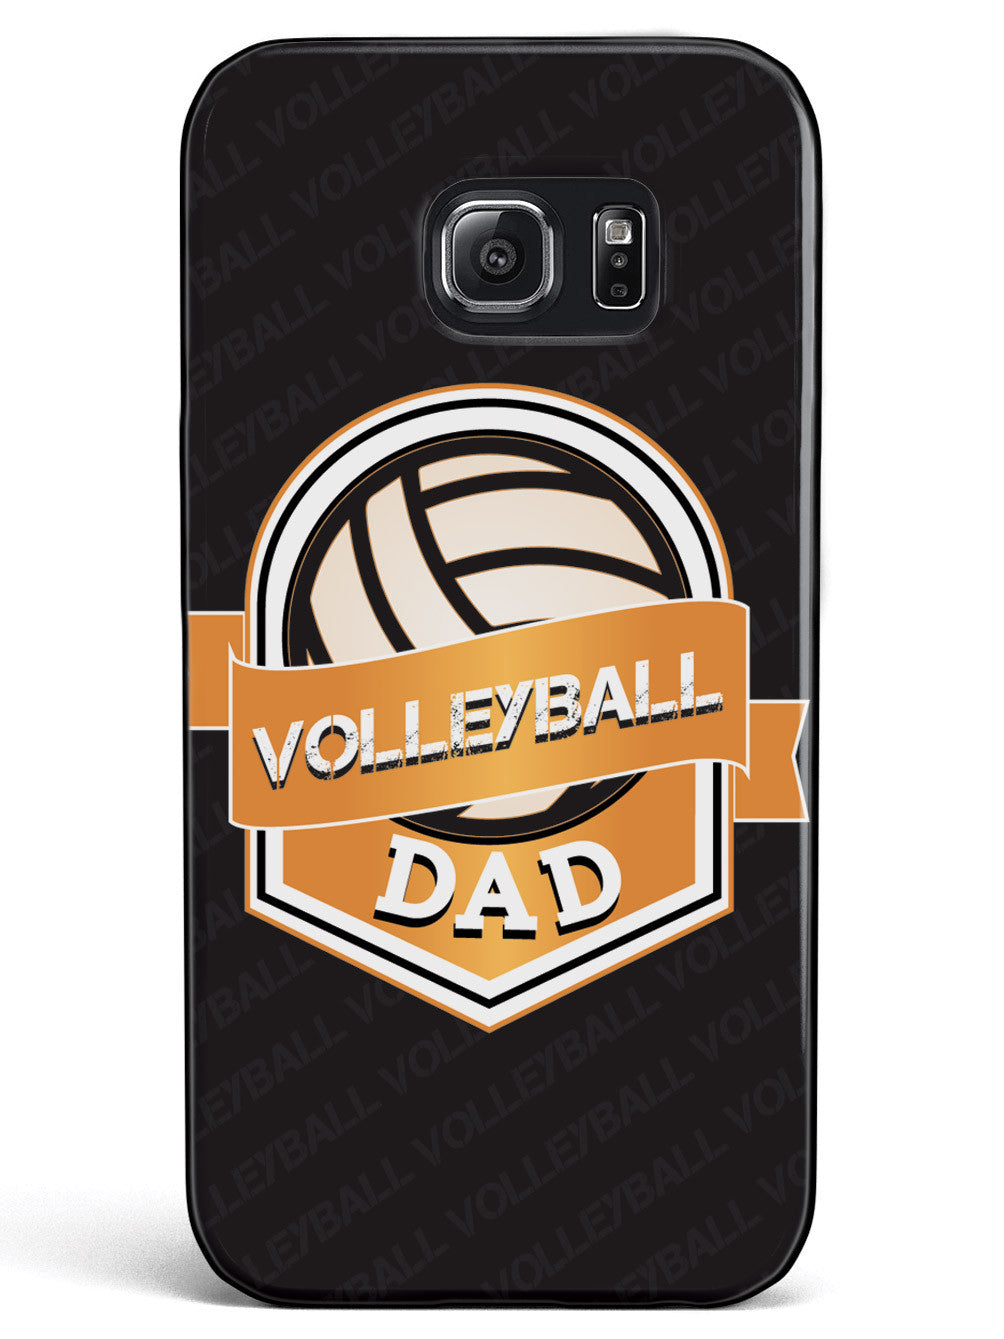 Volleyball Dad Case